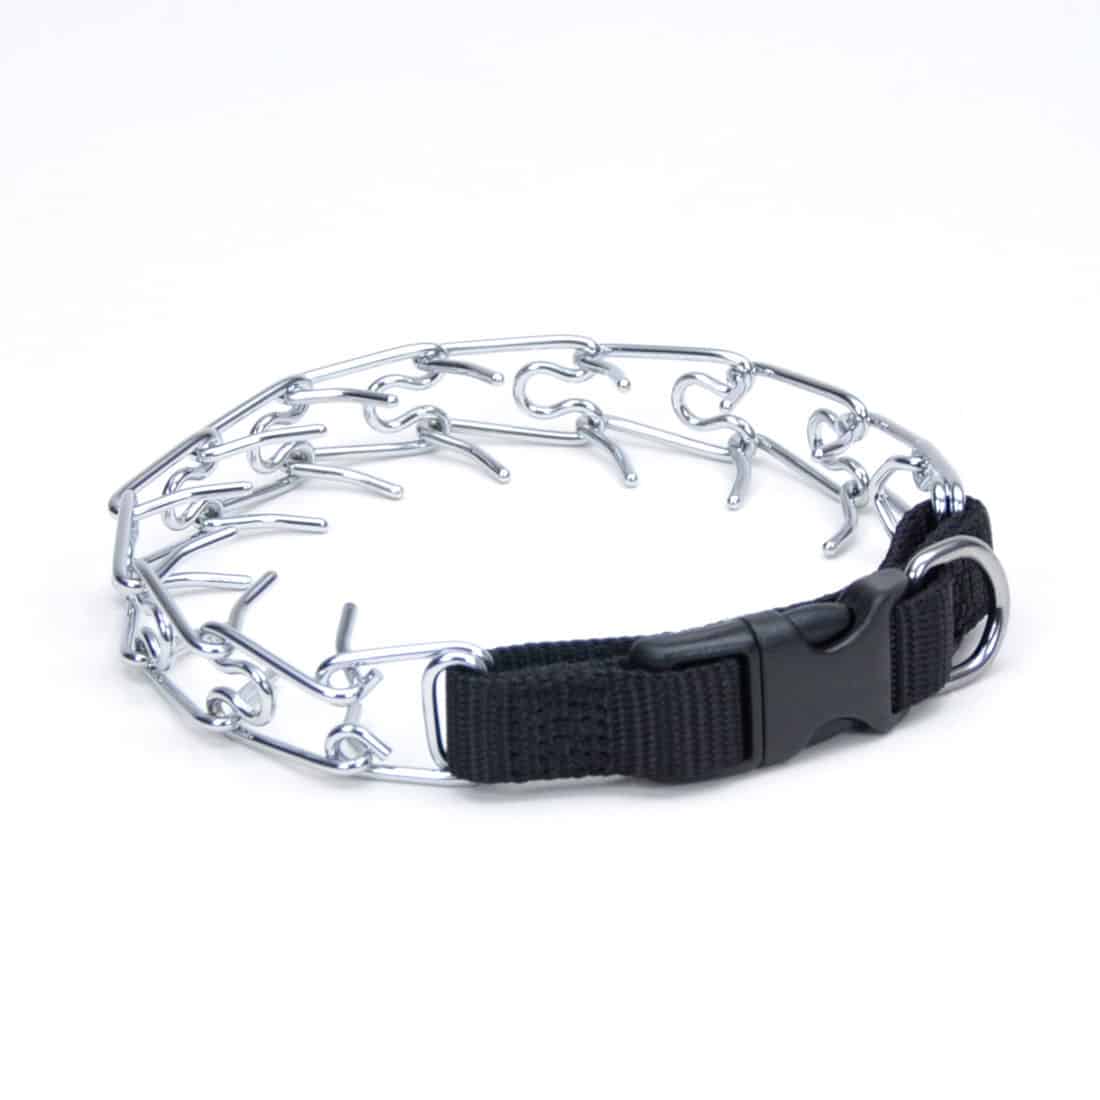 05592-blk18 Coastal Pet Products Titan Easy-On Dog Prong Training Collar with Buckle Medium - Silver (17.5"x2.50"x2")